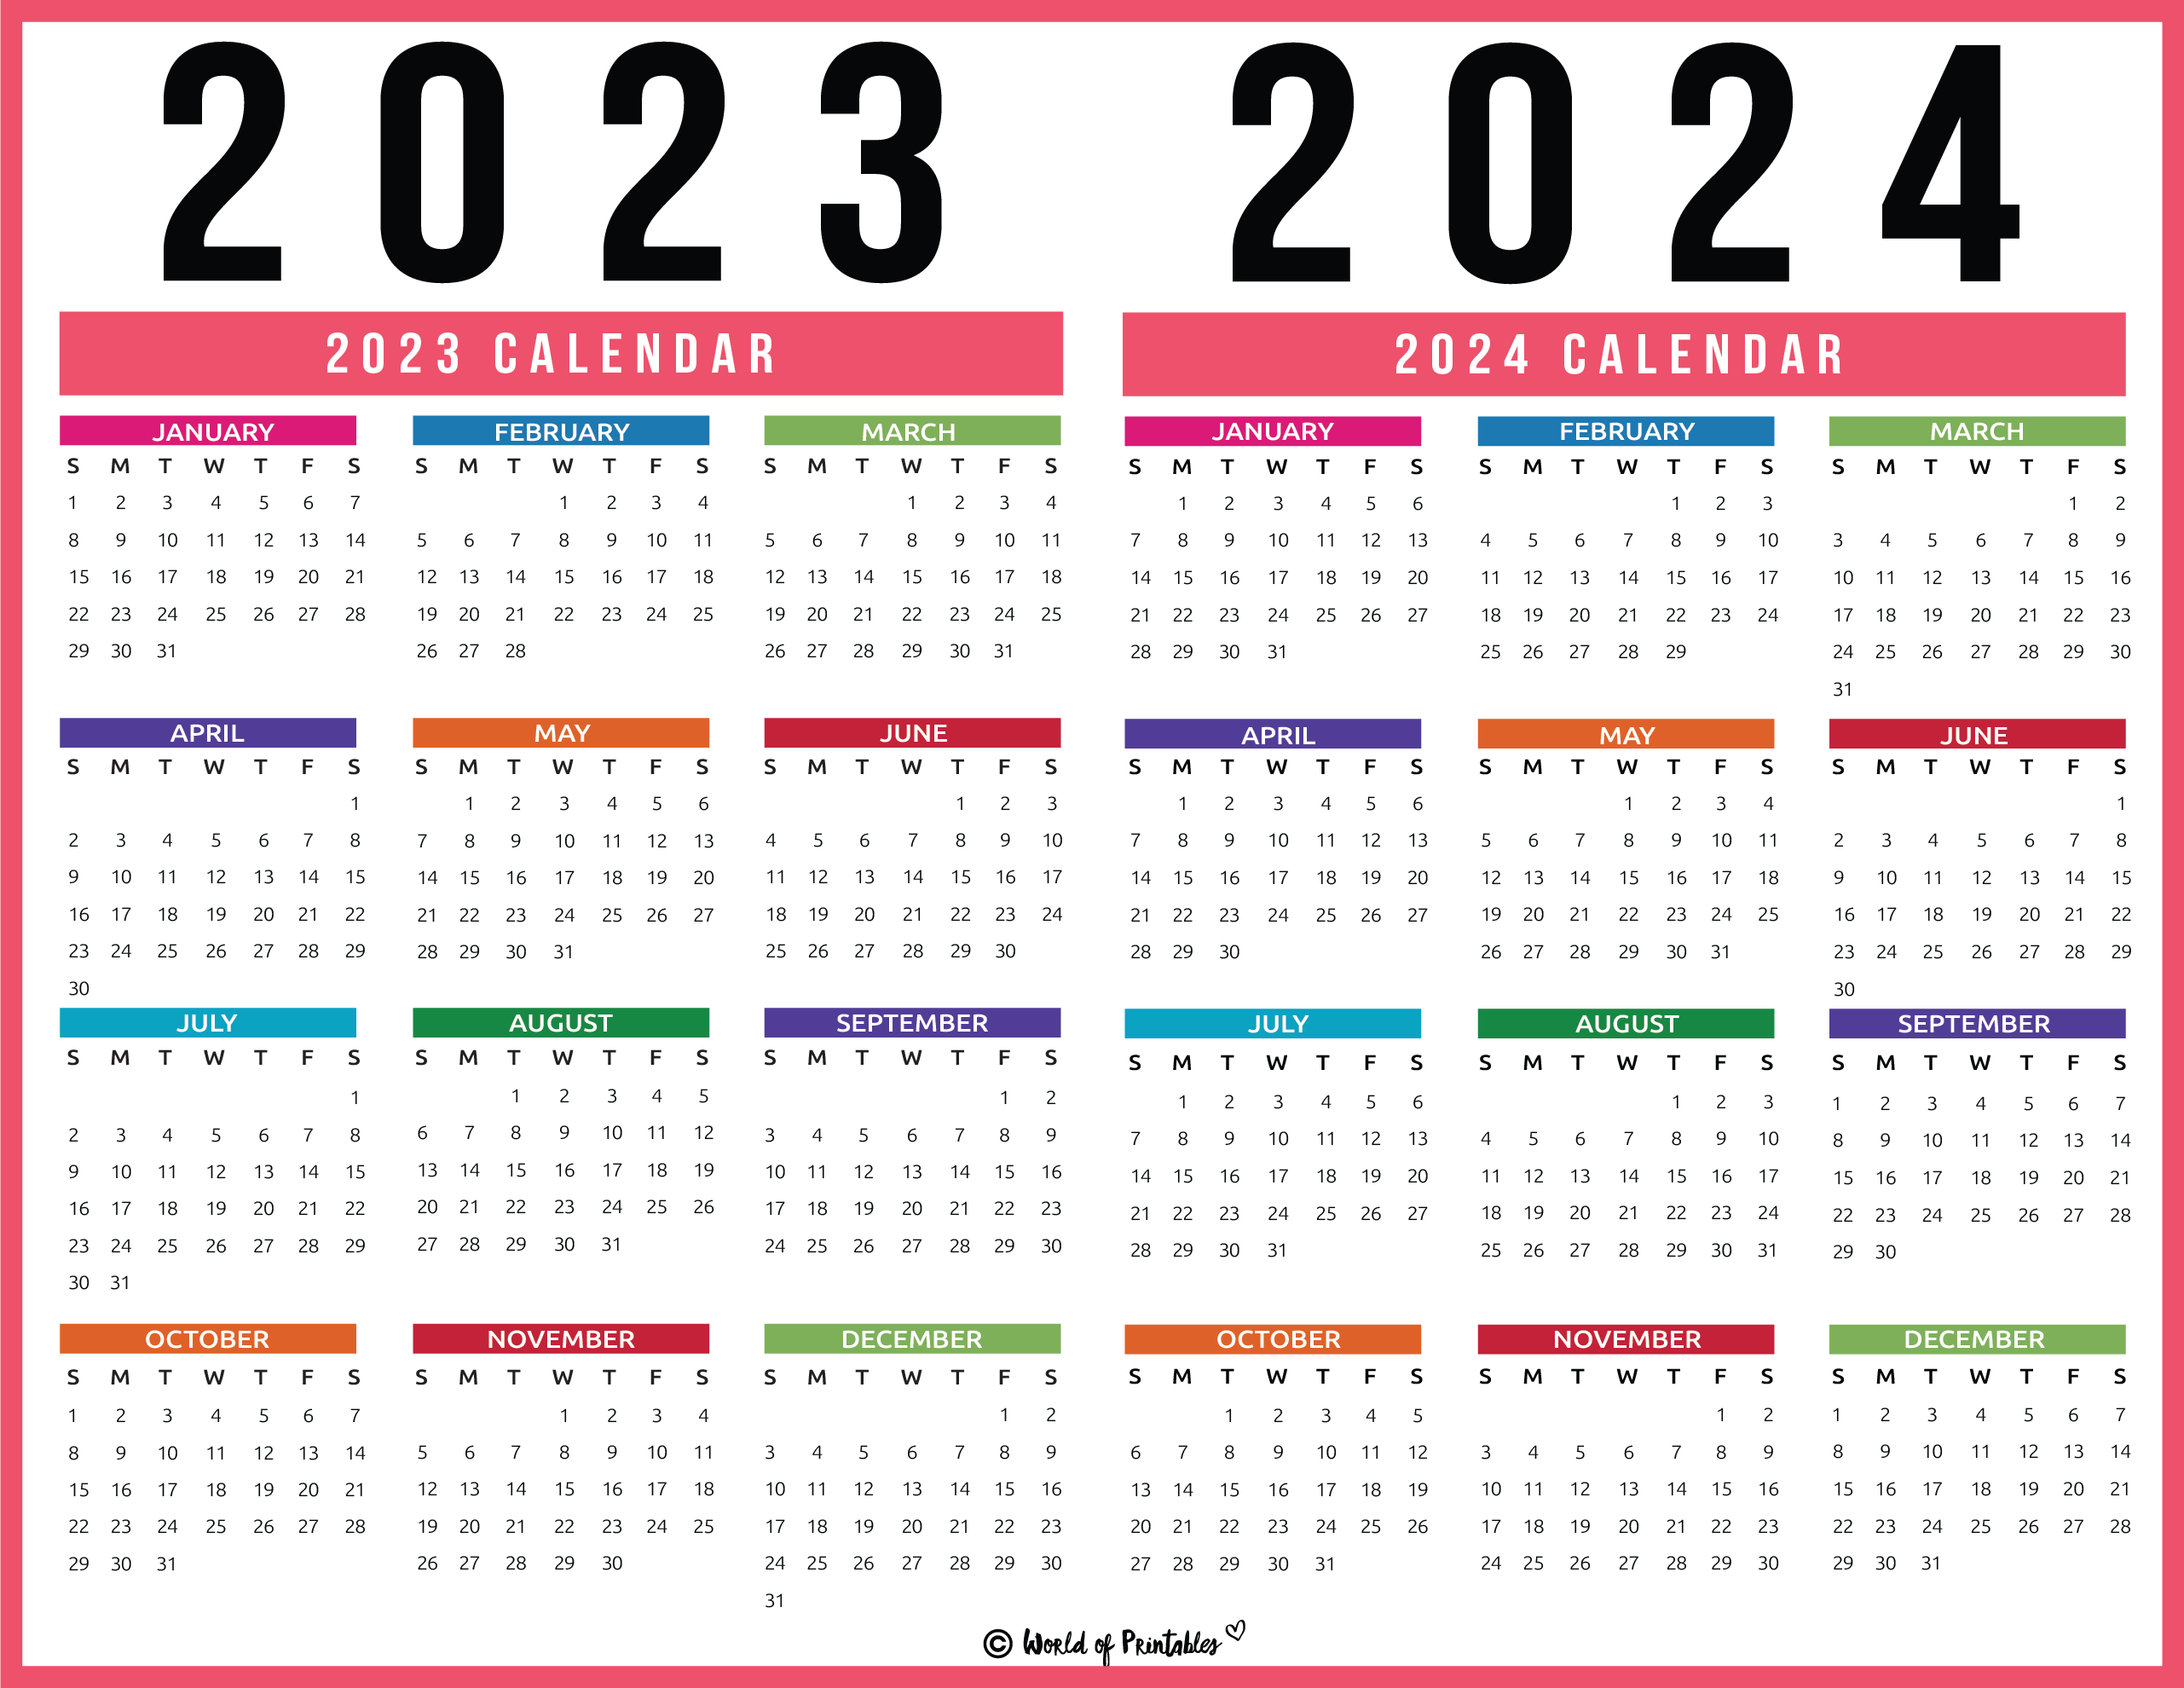 2023 2024 Calendar Free Printables - World Of Printables for Calendar 2023 And 2024 Printable